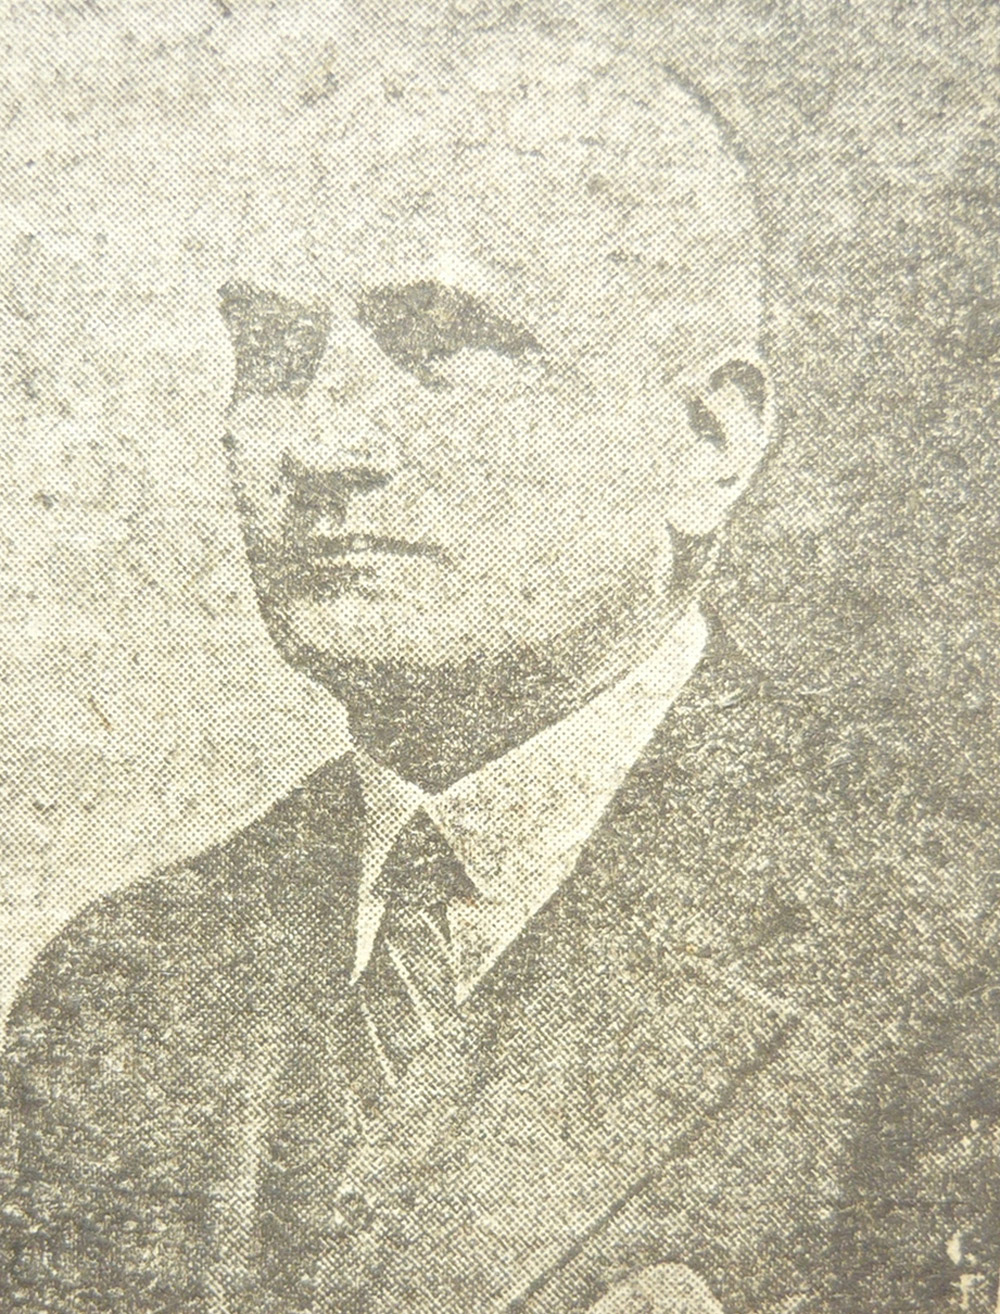 Dr. Valentin Poruțiu